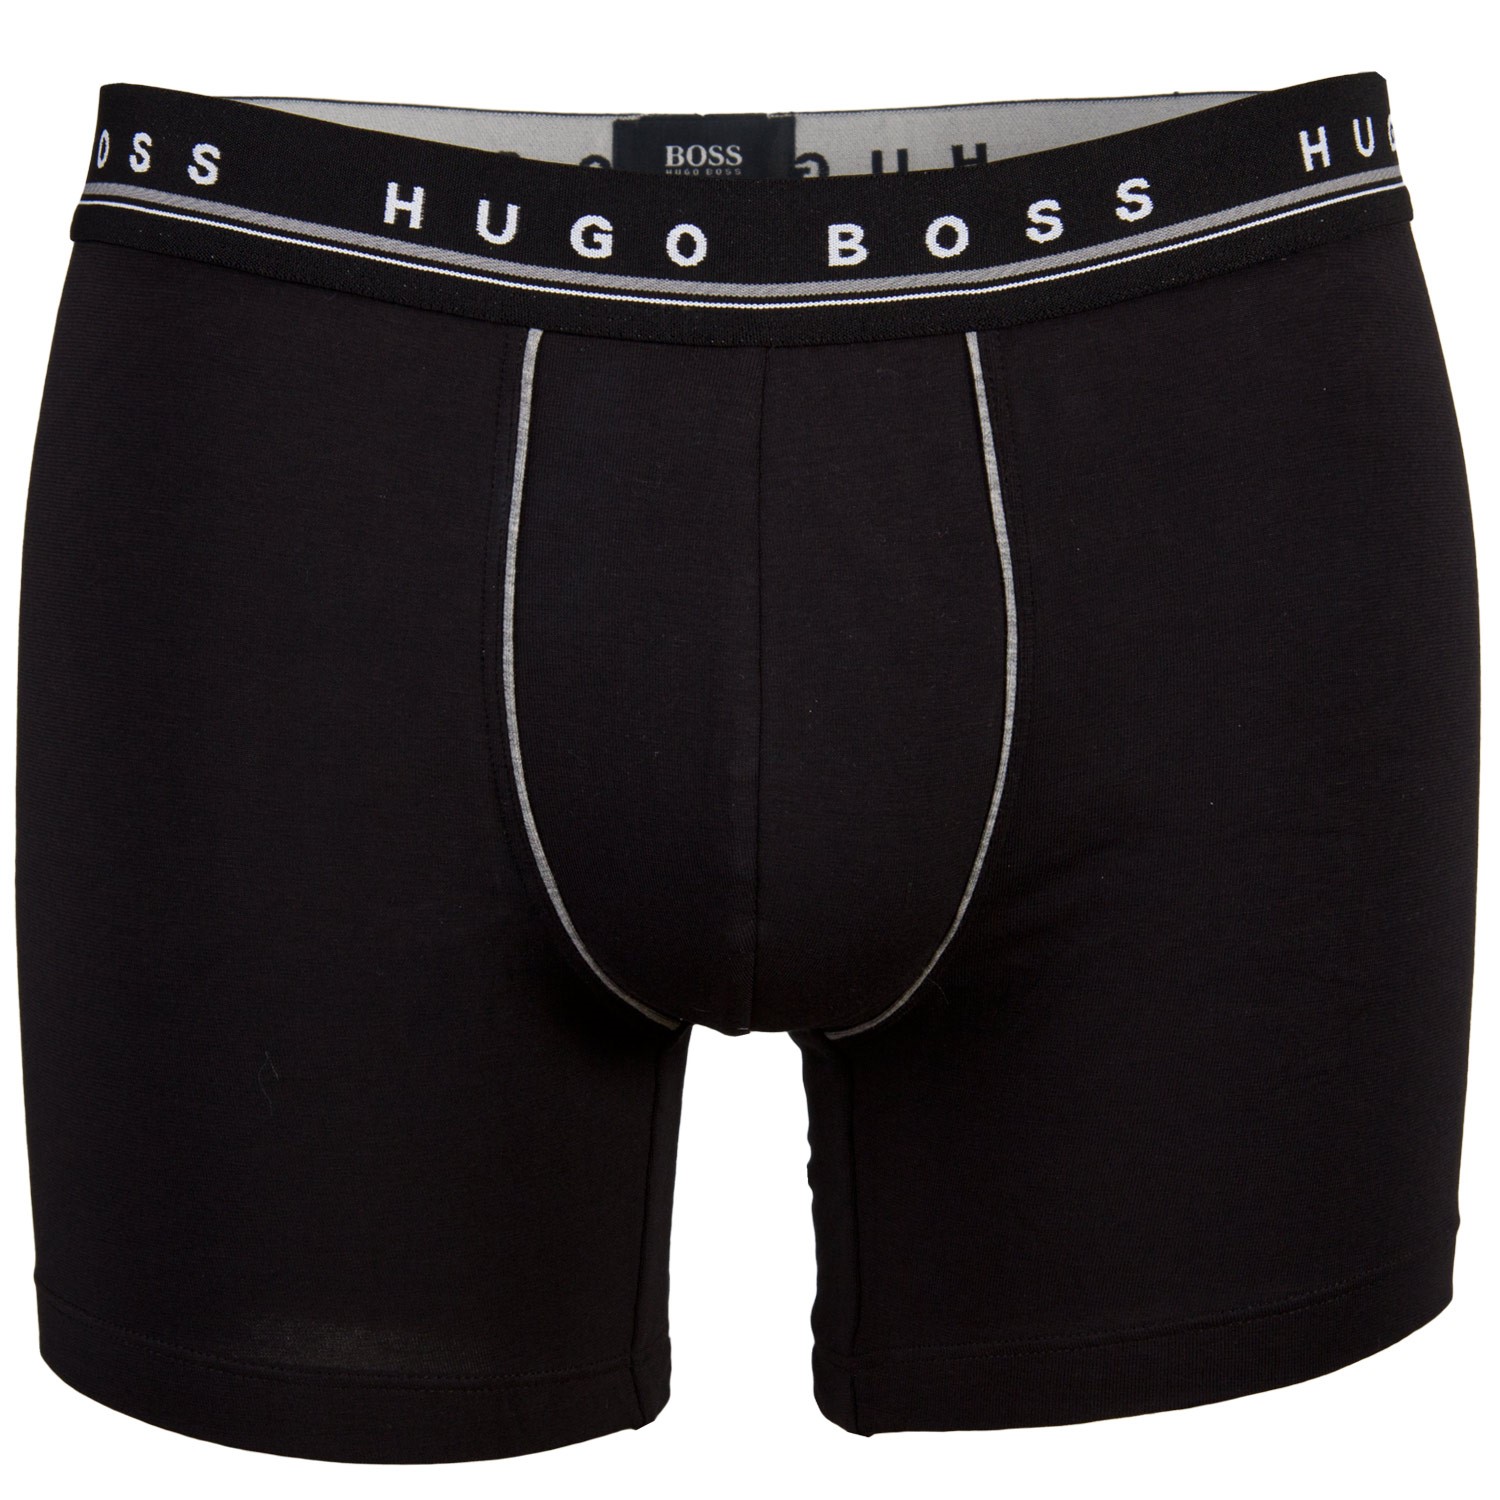 hugo boss cyclist underwear